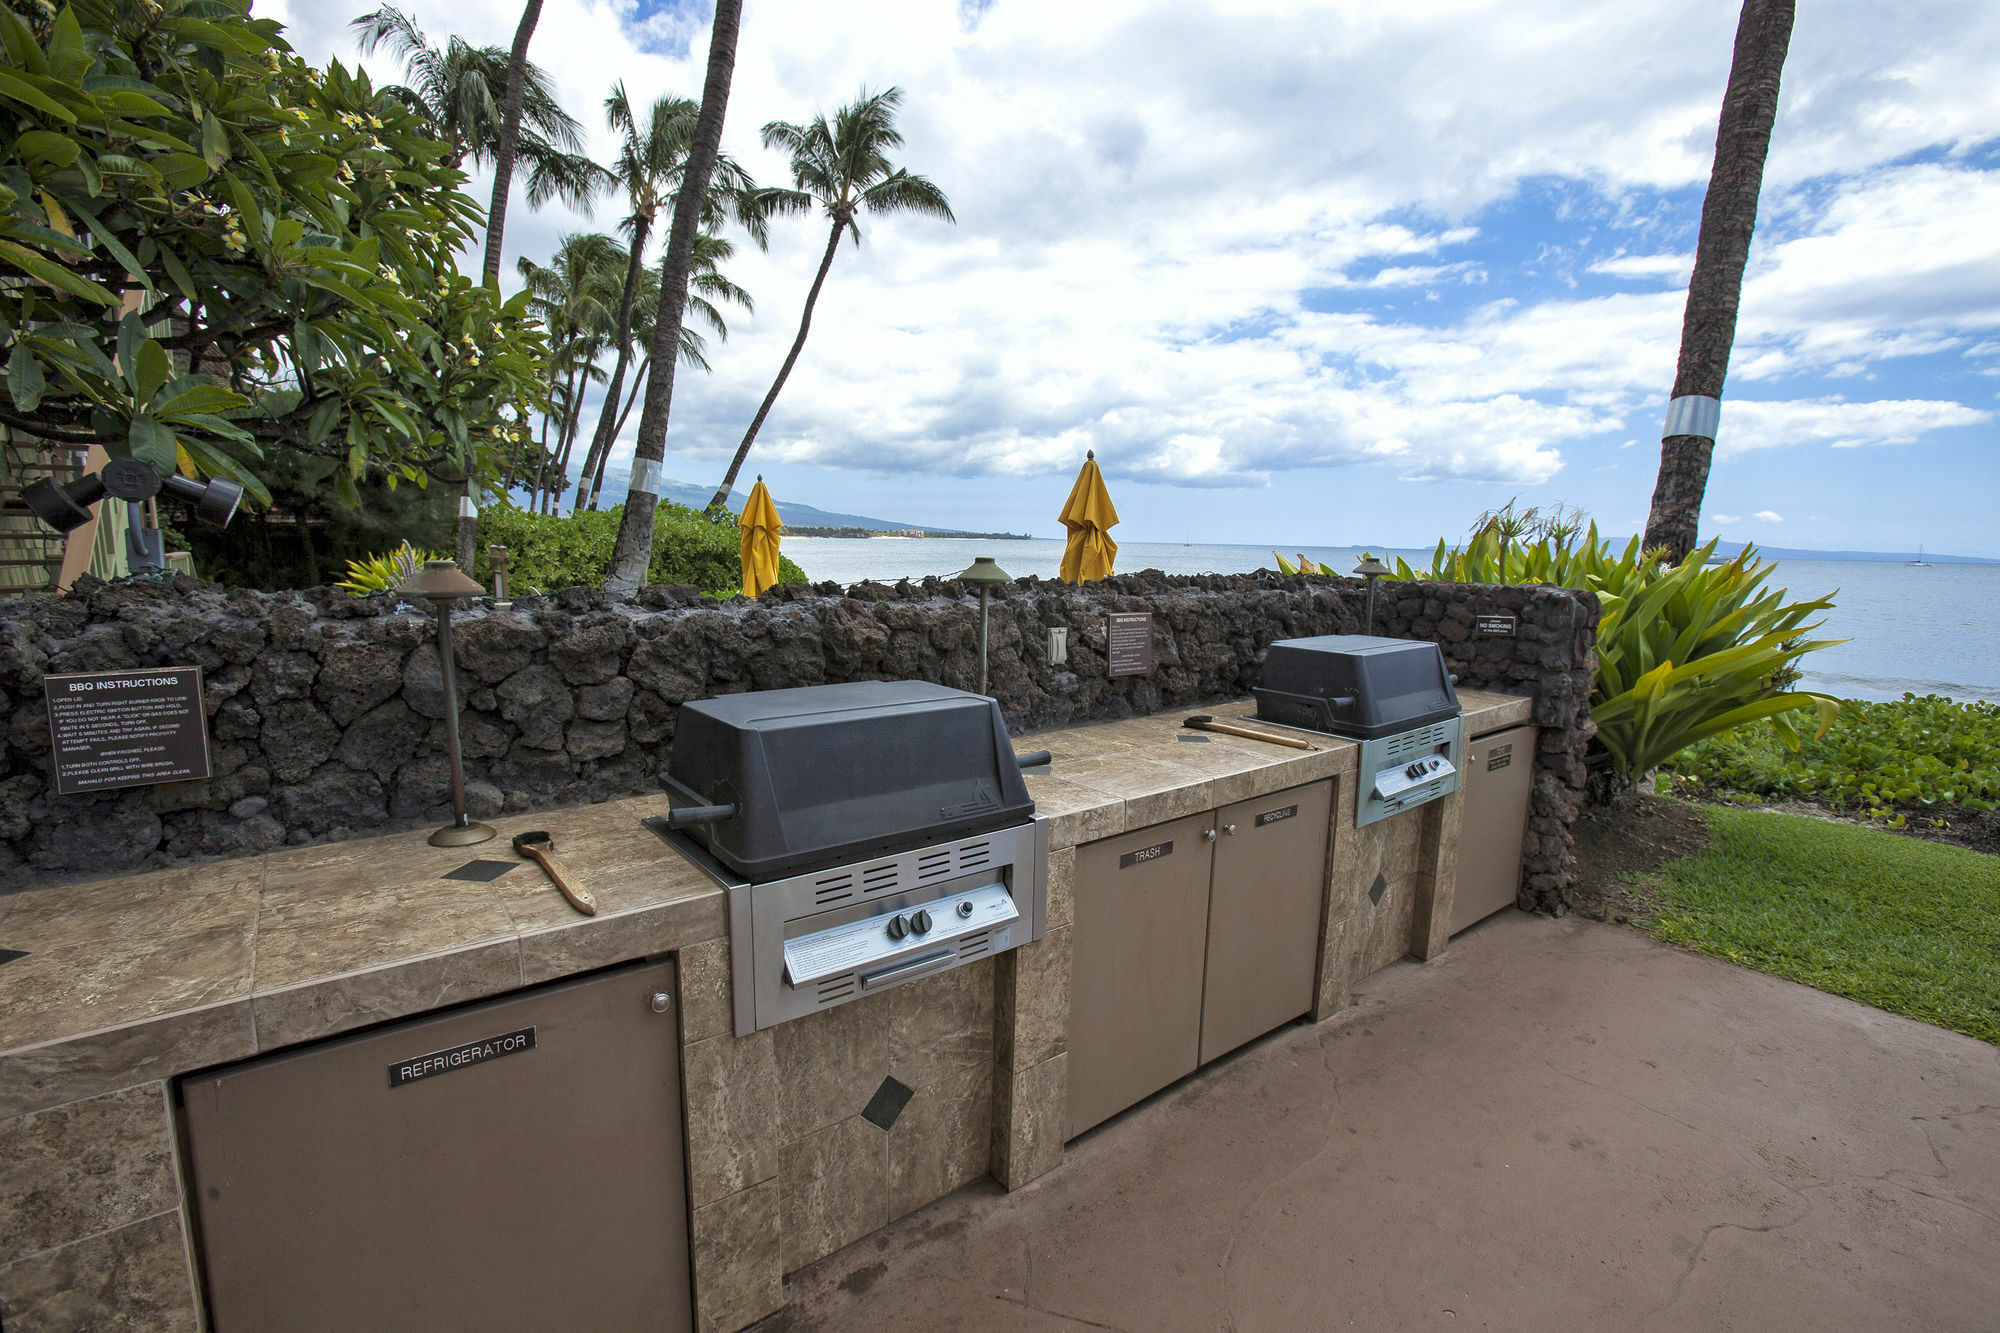 Nani Kai Hale By Maui Condo And Home Kihei Exterior photo